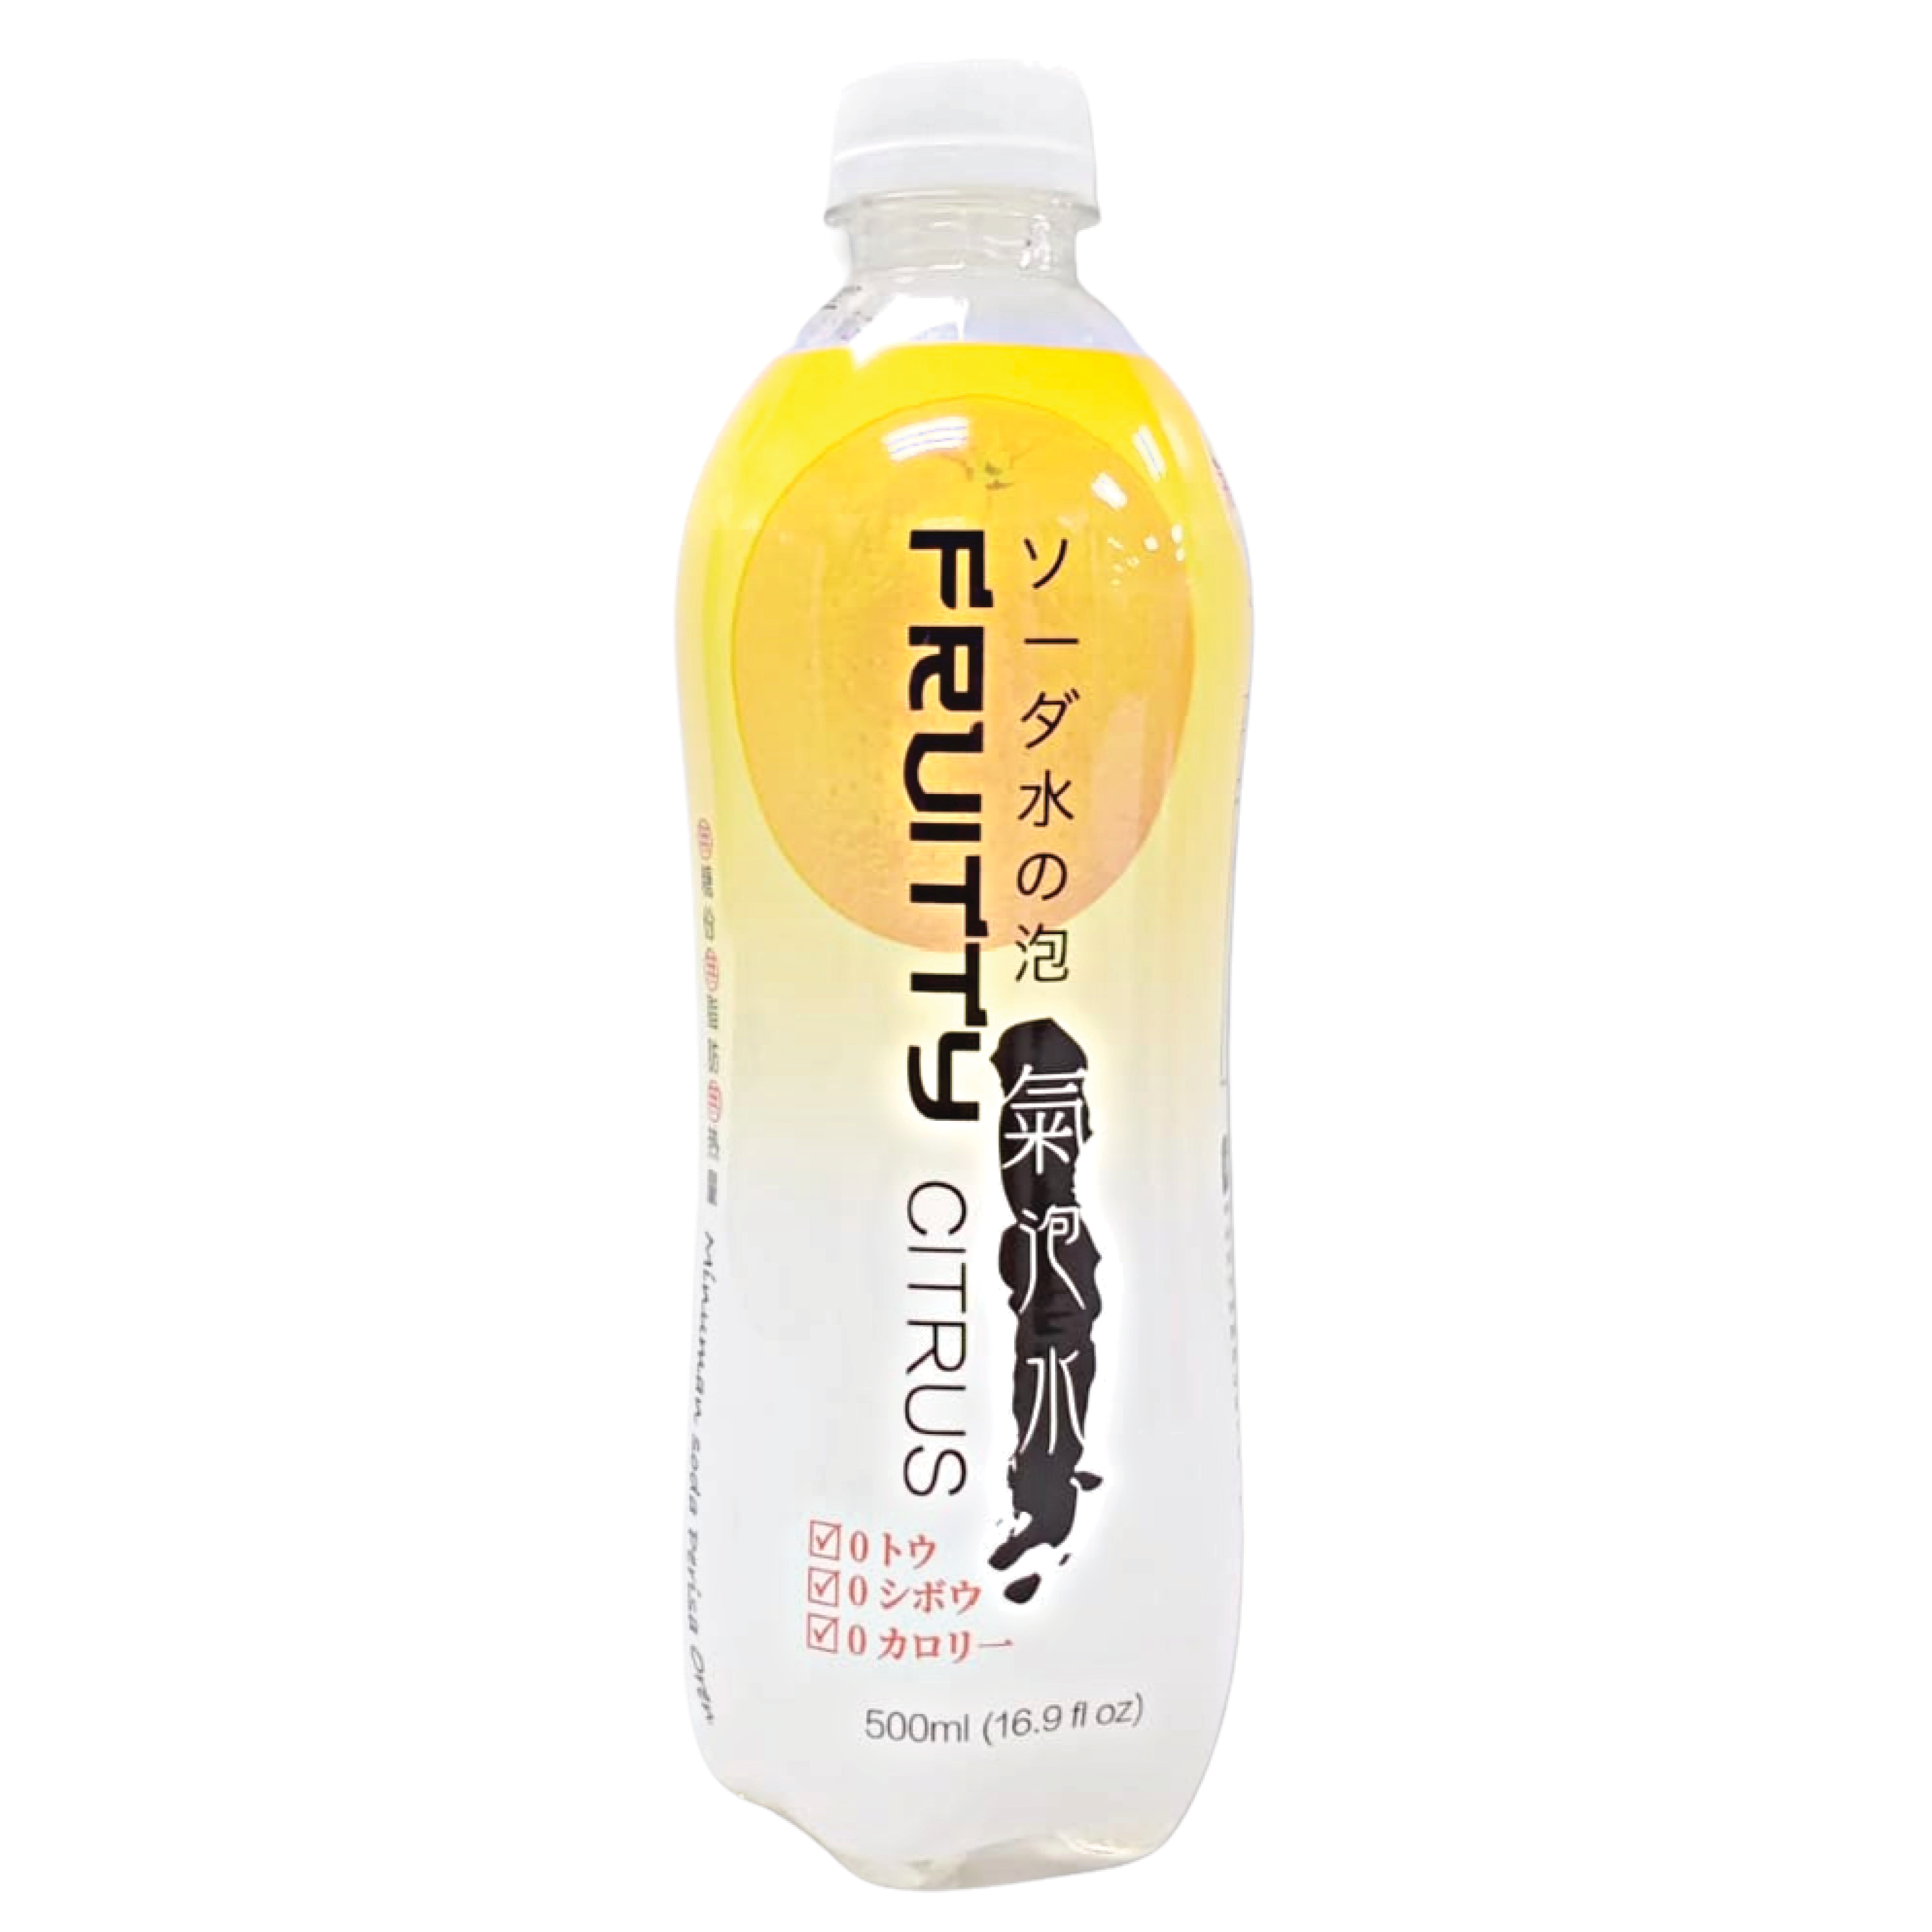 Pere Ocean Fruitty Sparkling Soda Orange Citrus Flavoured Water 500ml